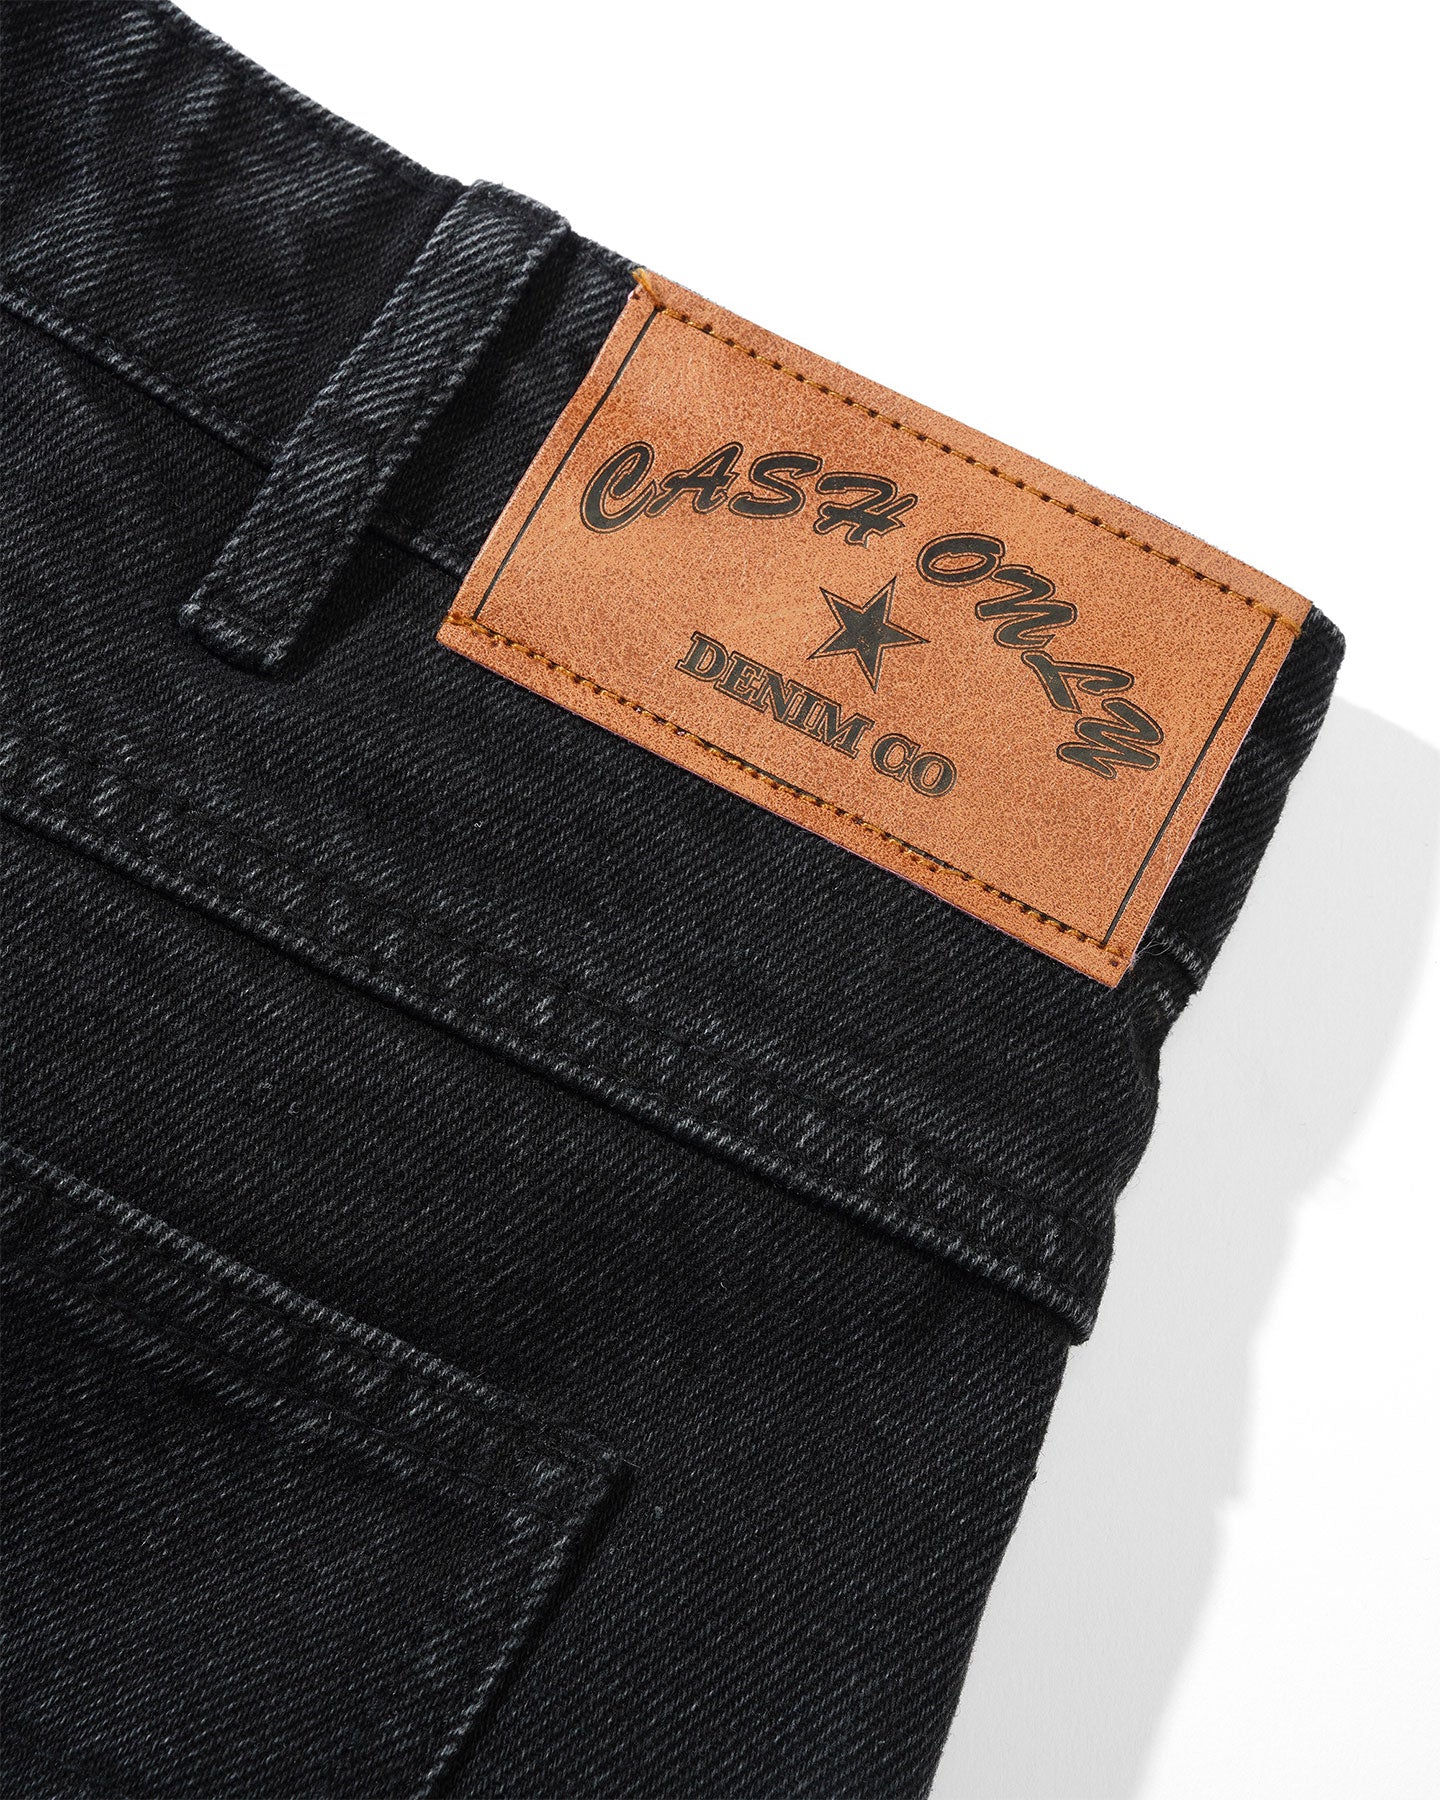 Cash Only Bone Denim Jeans - Black